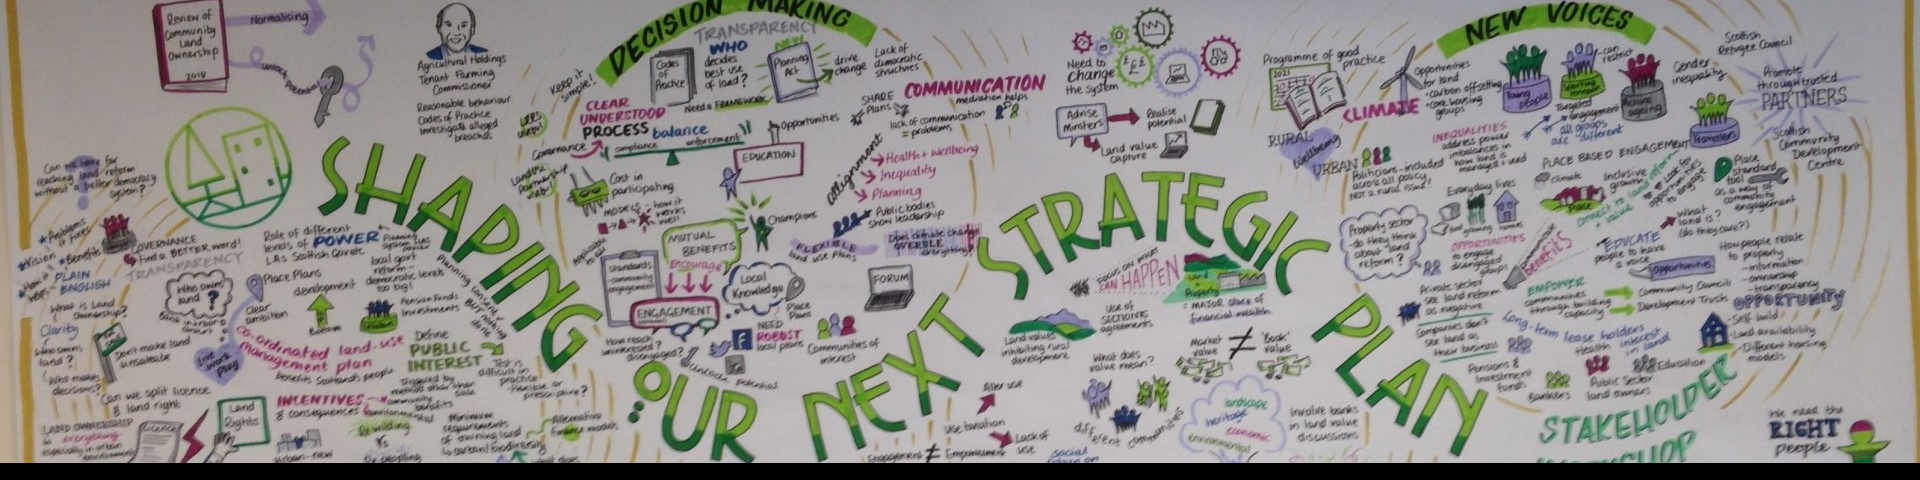 Infographic capturing stakeholder workshop feedback